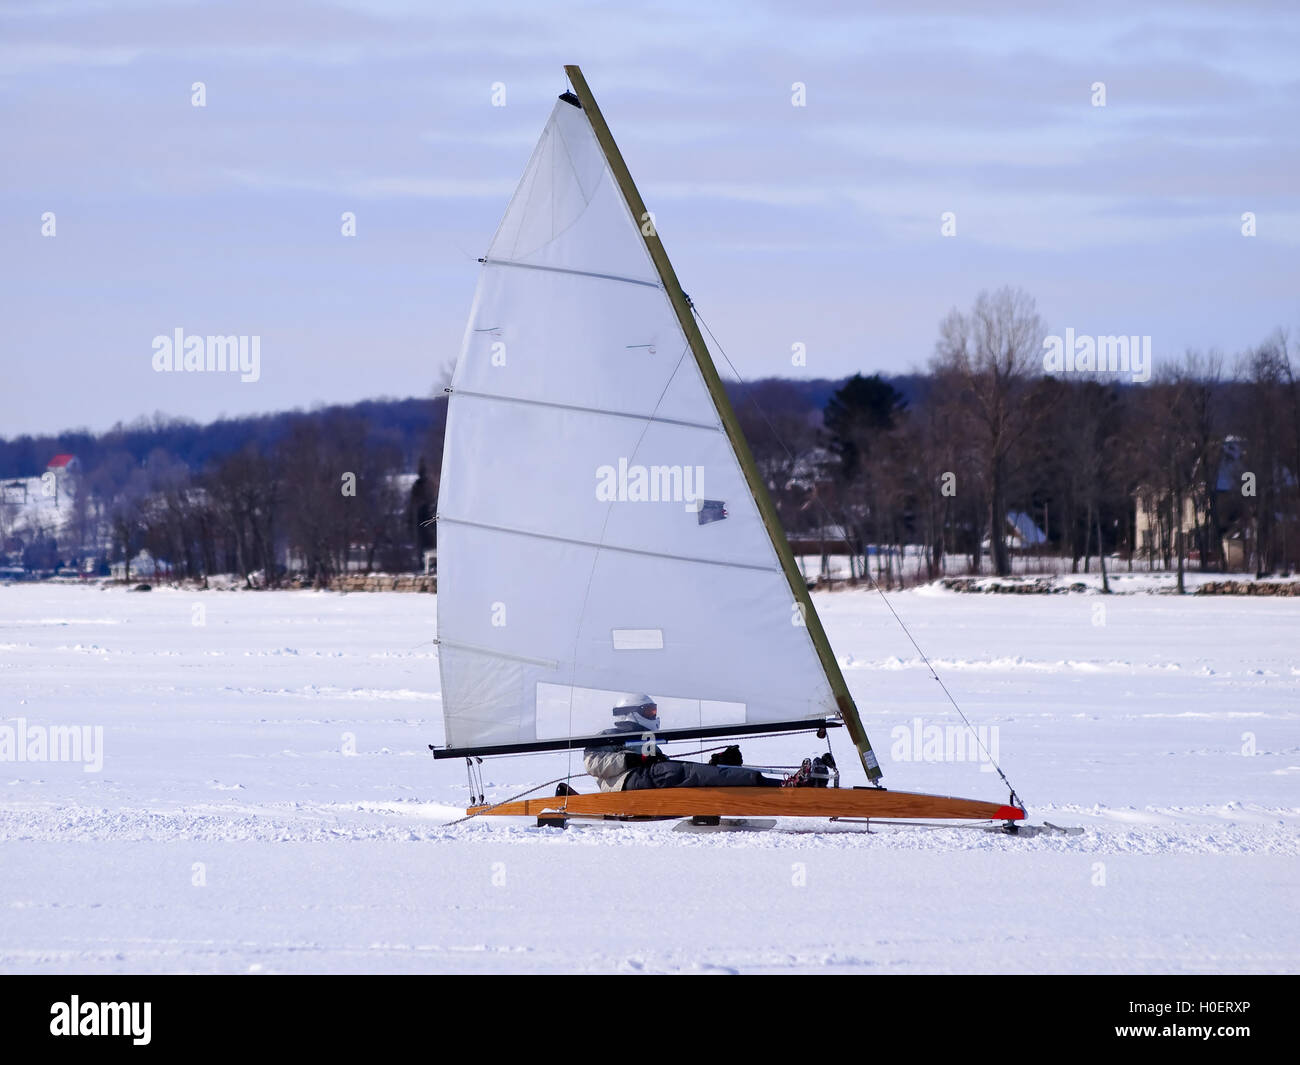 Ice sailing on the frozen lake Stock Photo